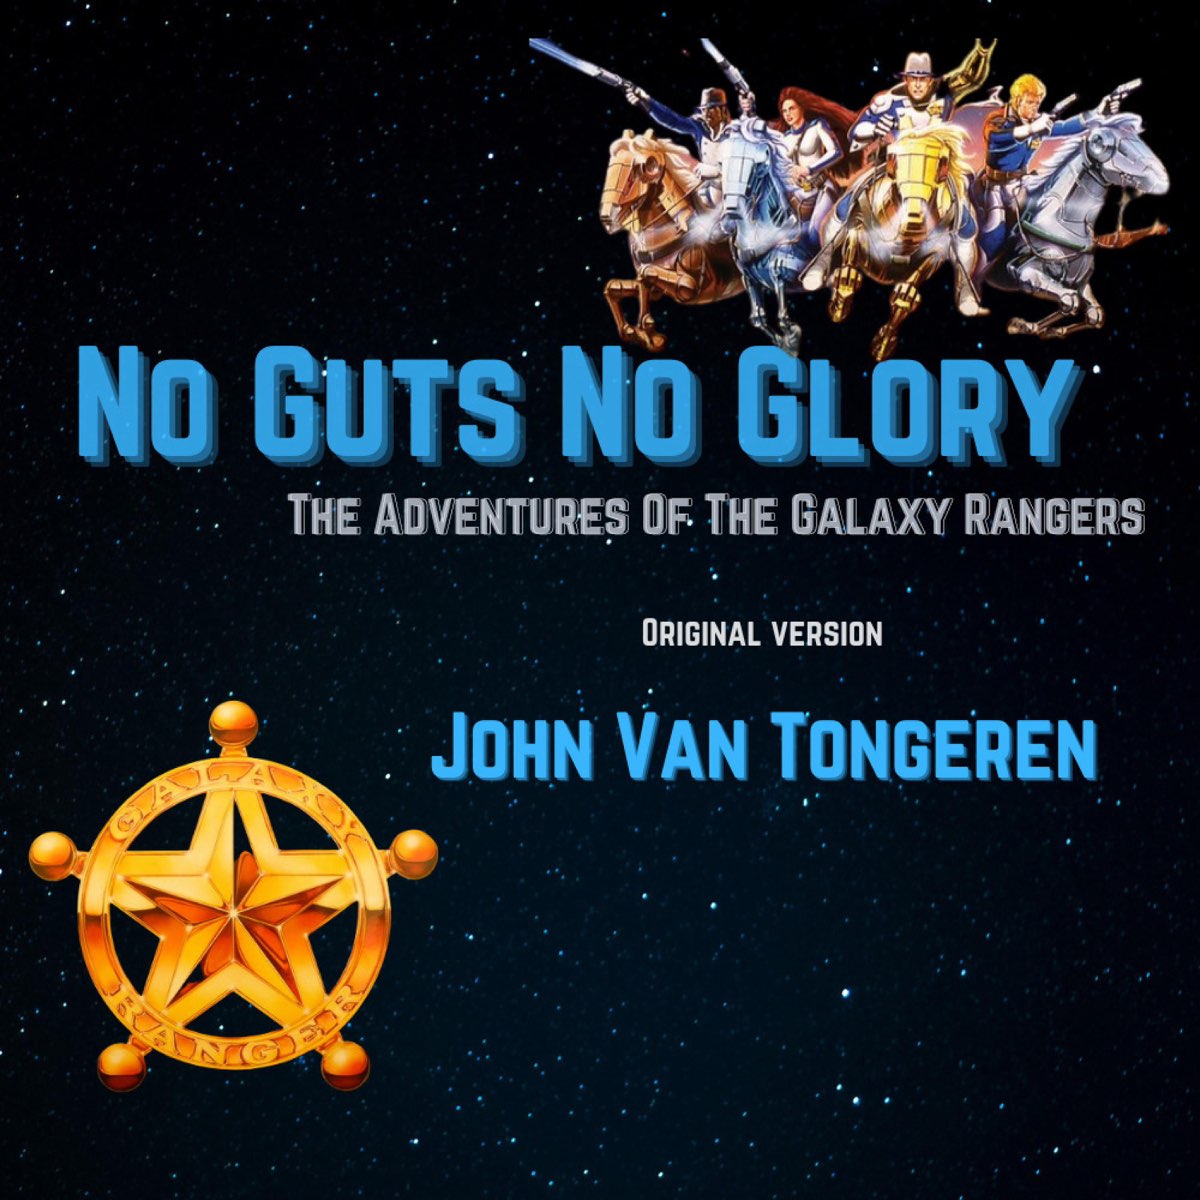 Don Markstein's Toonopedia: The Galaxy Rangers